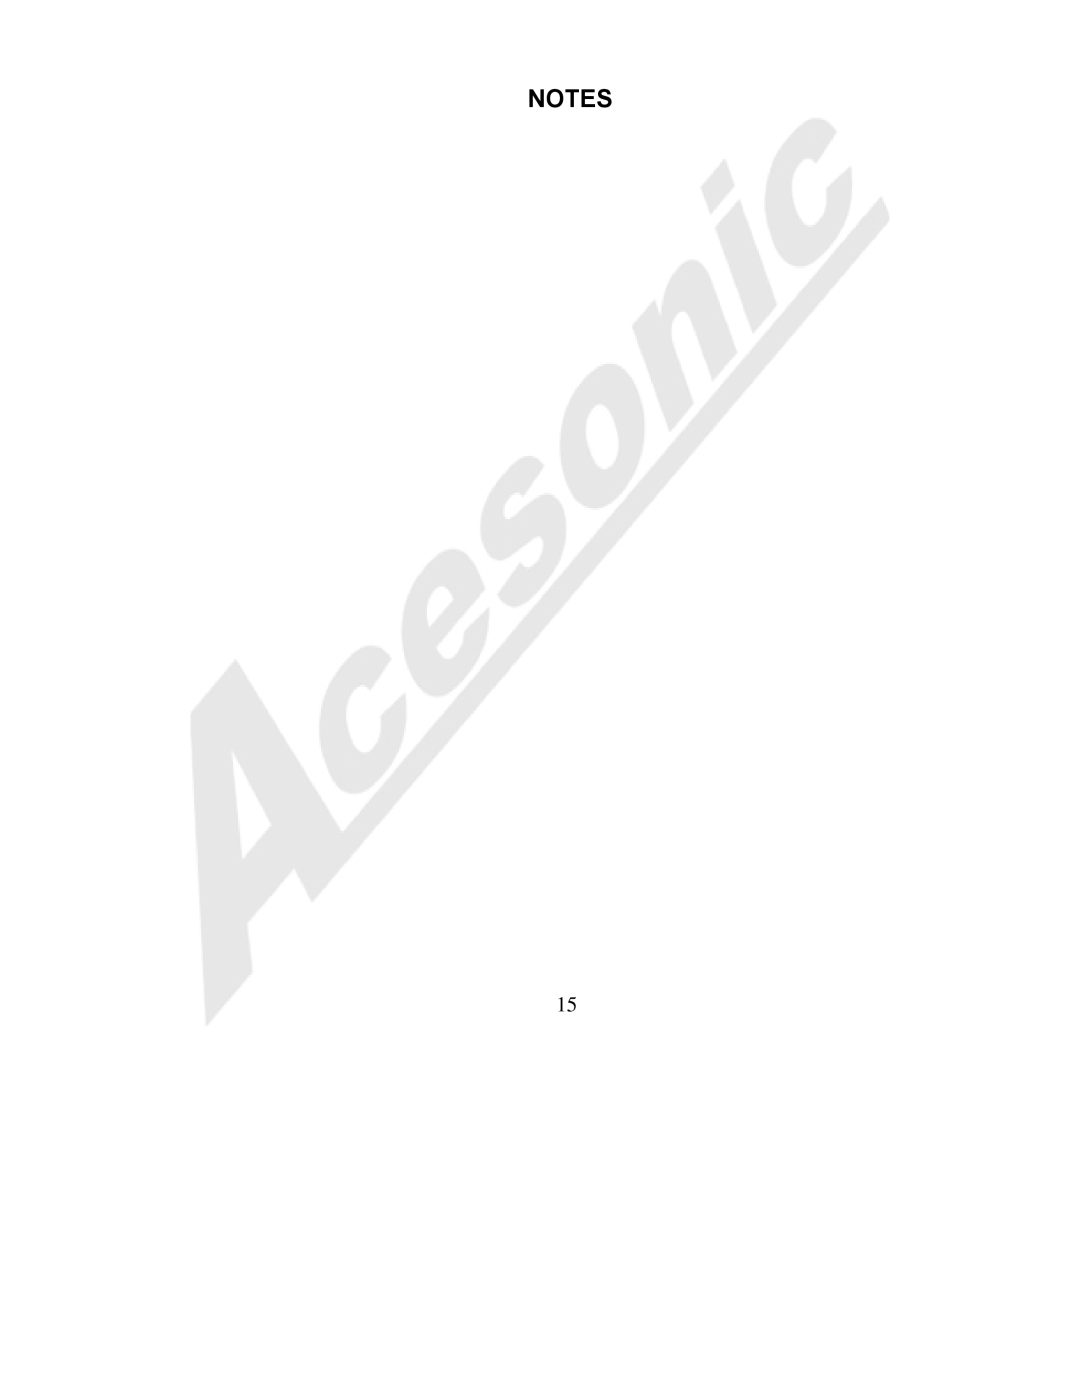 Acesonic BDK-2000 user manual 